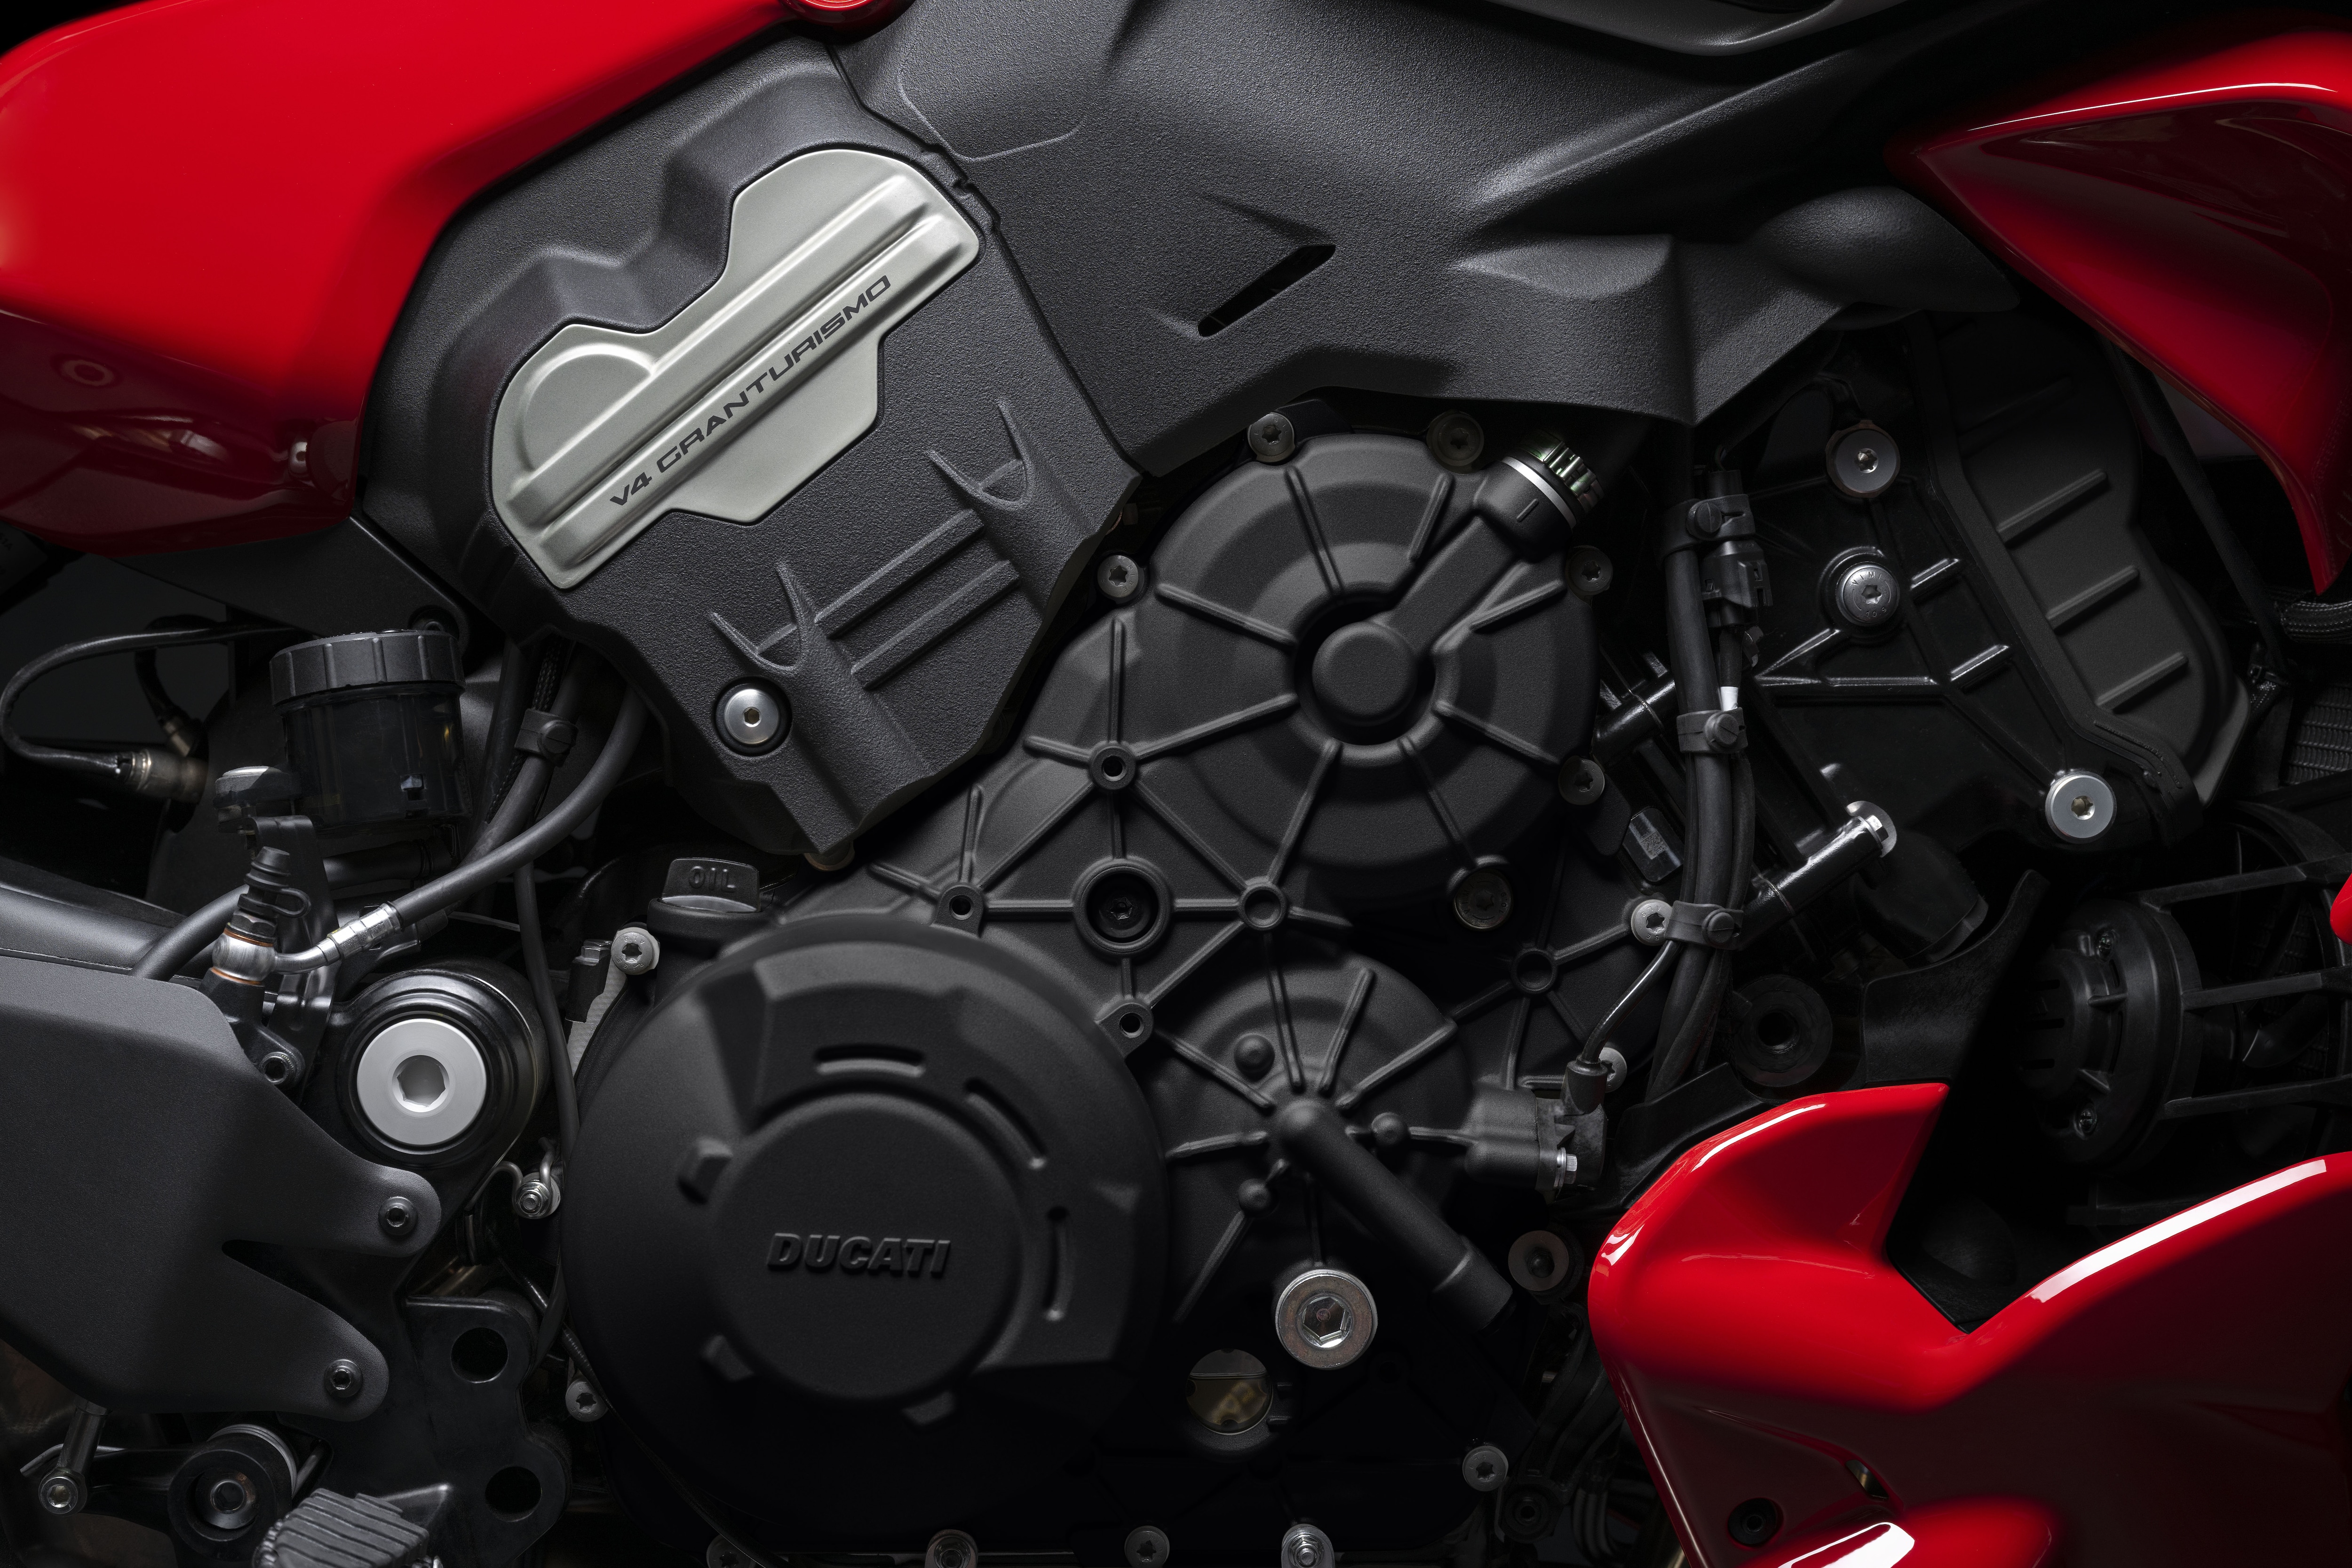 Diavel V4 引擎最大馬力達到 168hp ，最大扭力來到126Nm，為目前Ducati 市售扭力最大的V4引擎。